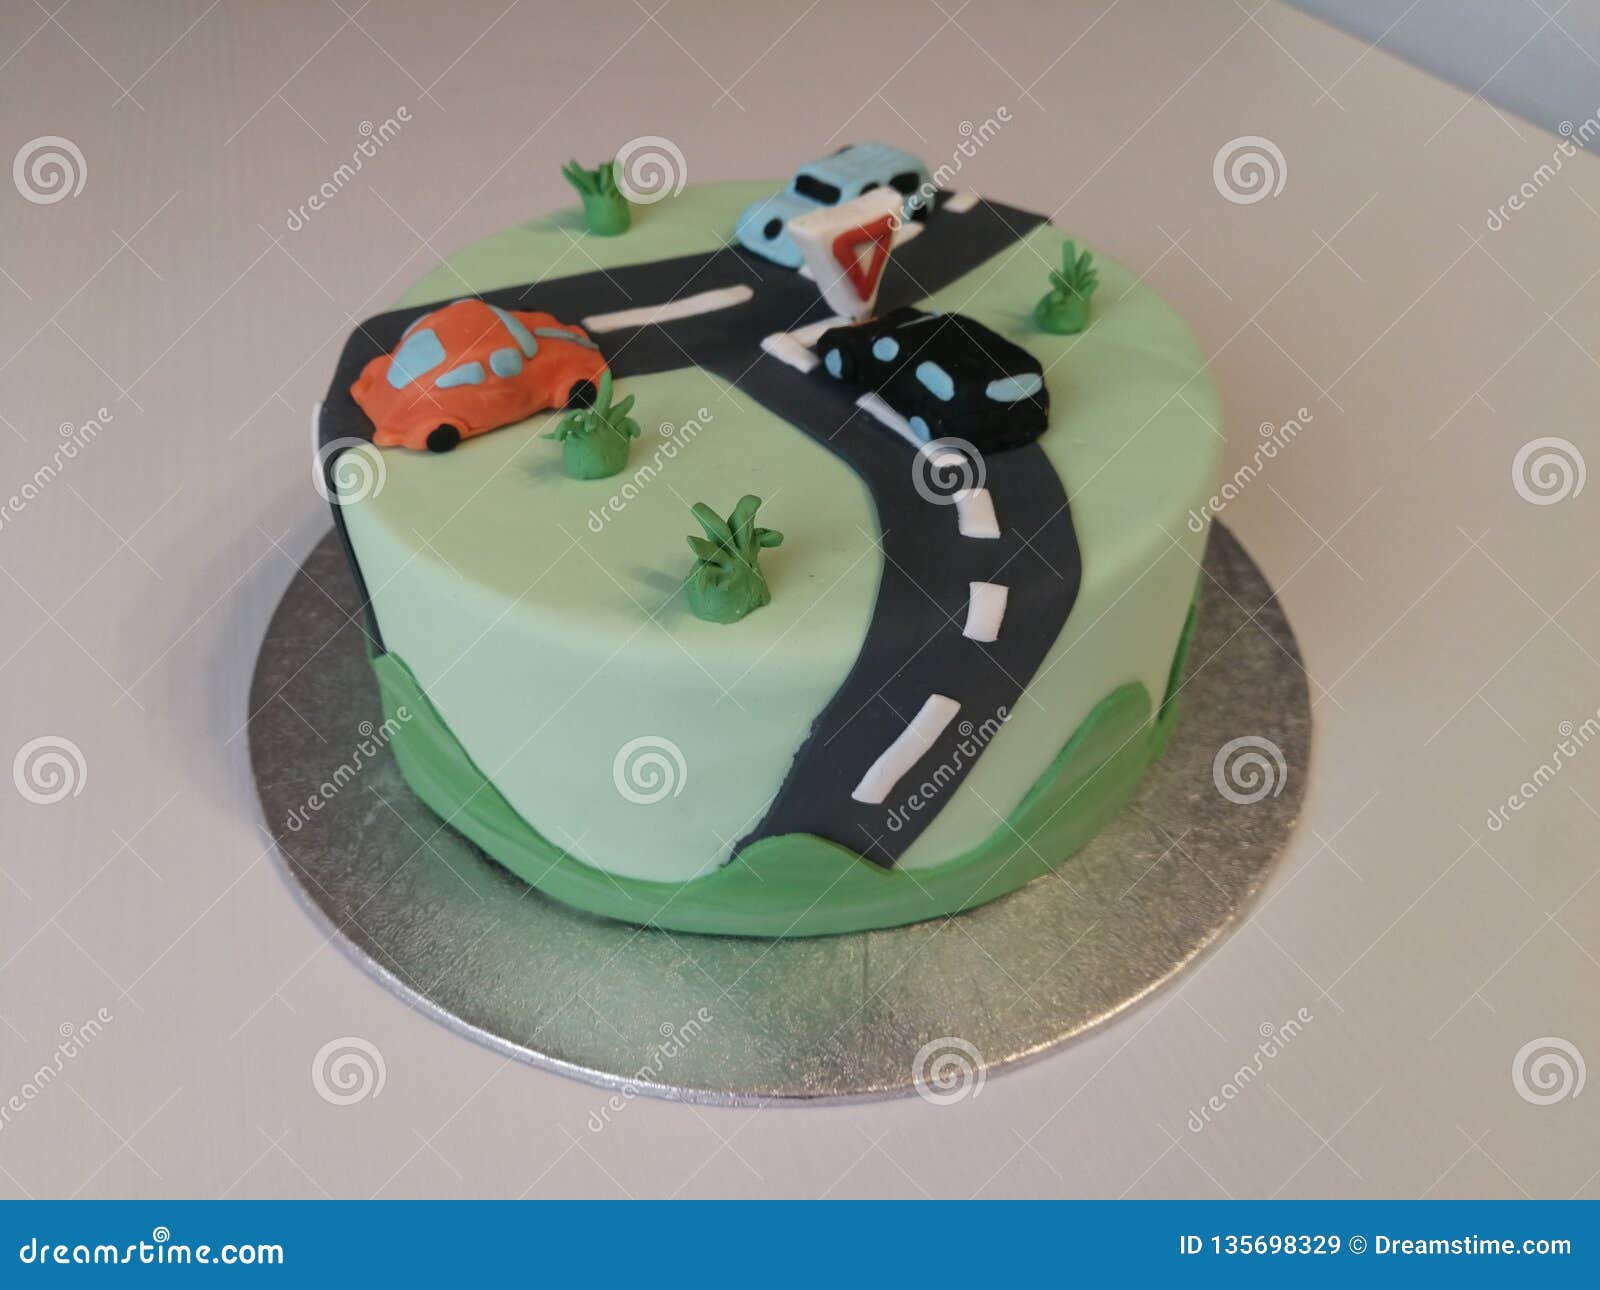 Spiral road car birthday cake | Cars birthday cake, Candy birthday cakes,  Birthday cake kids boys